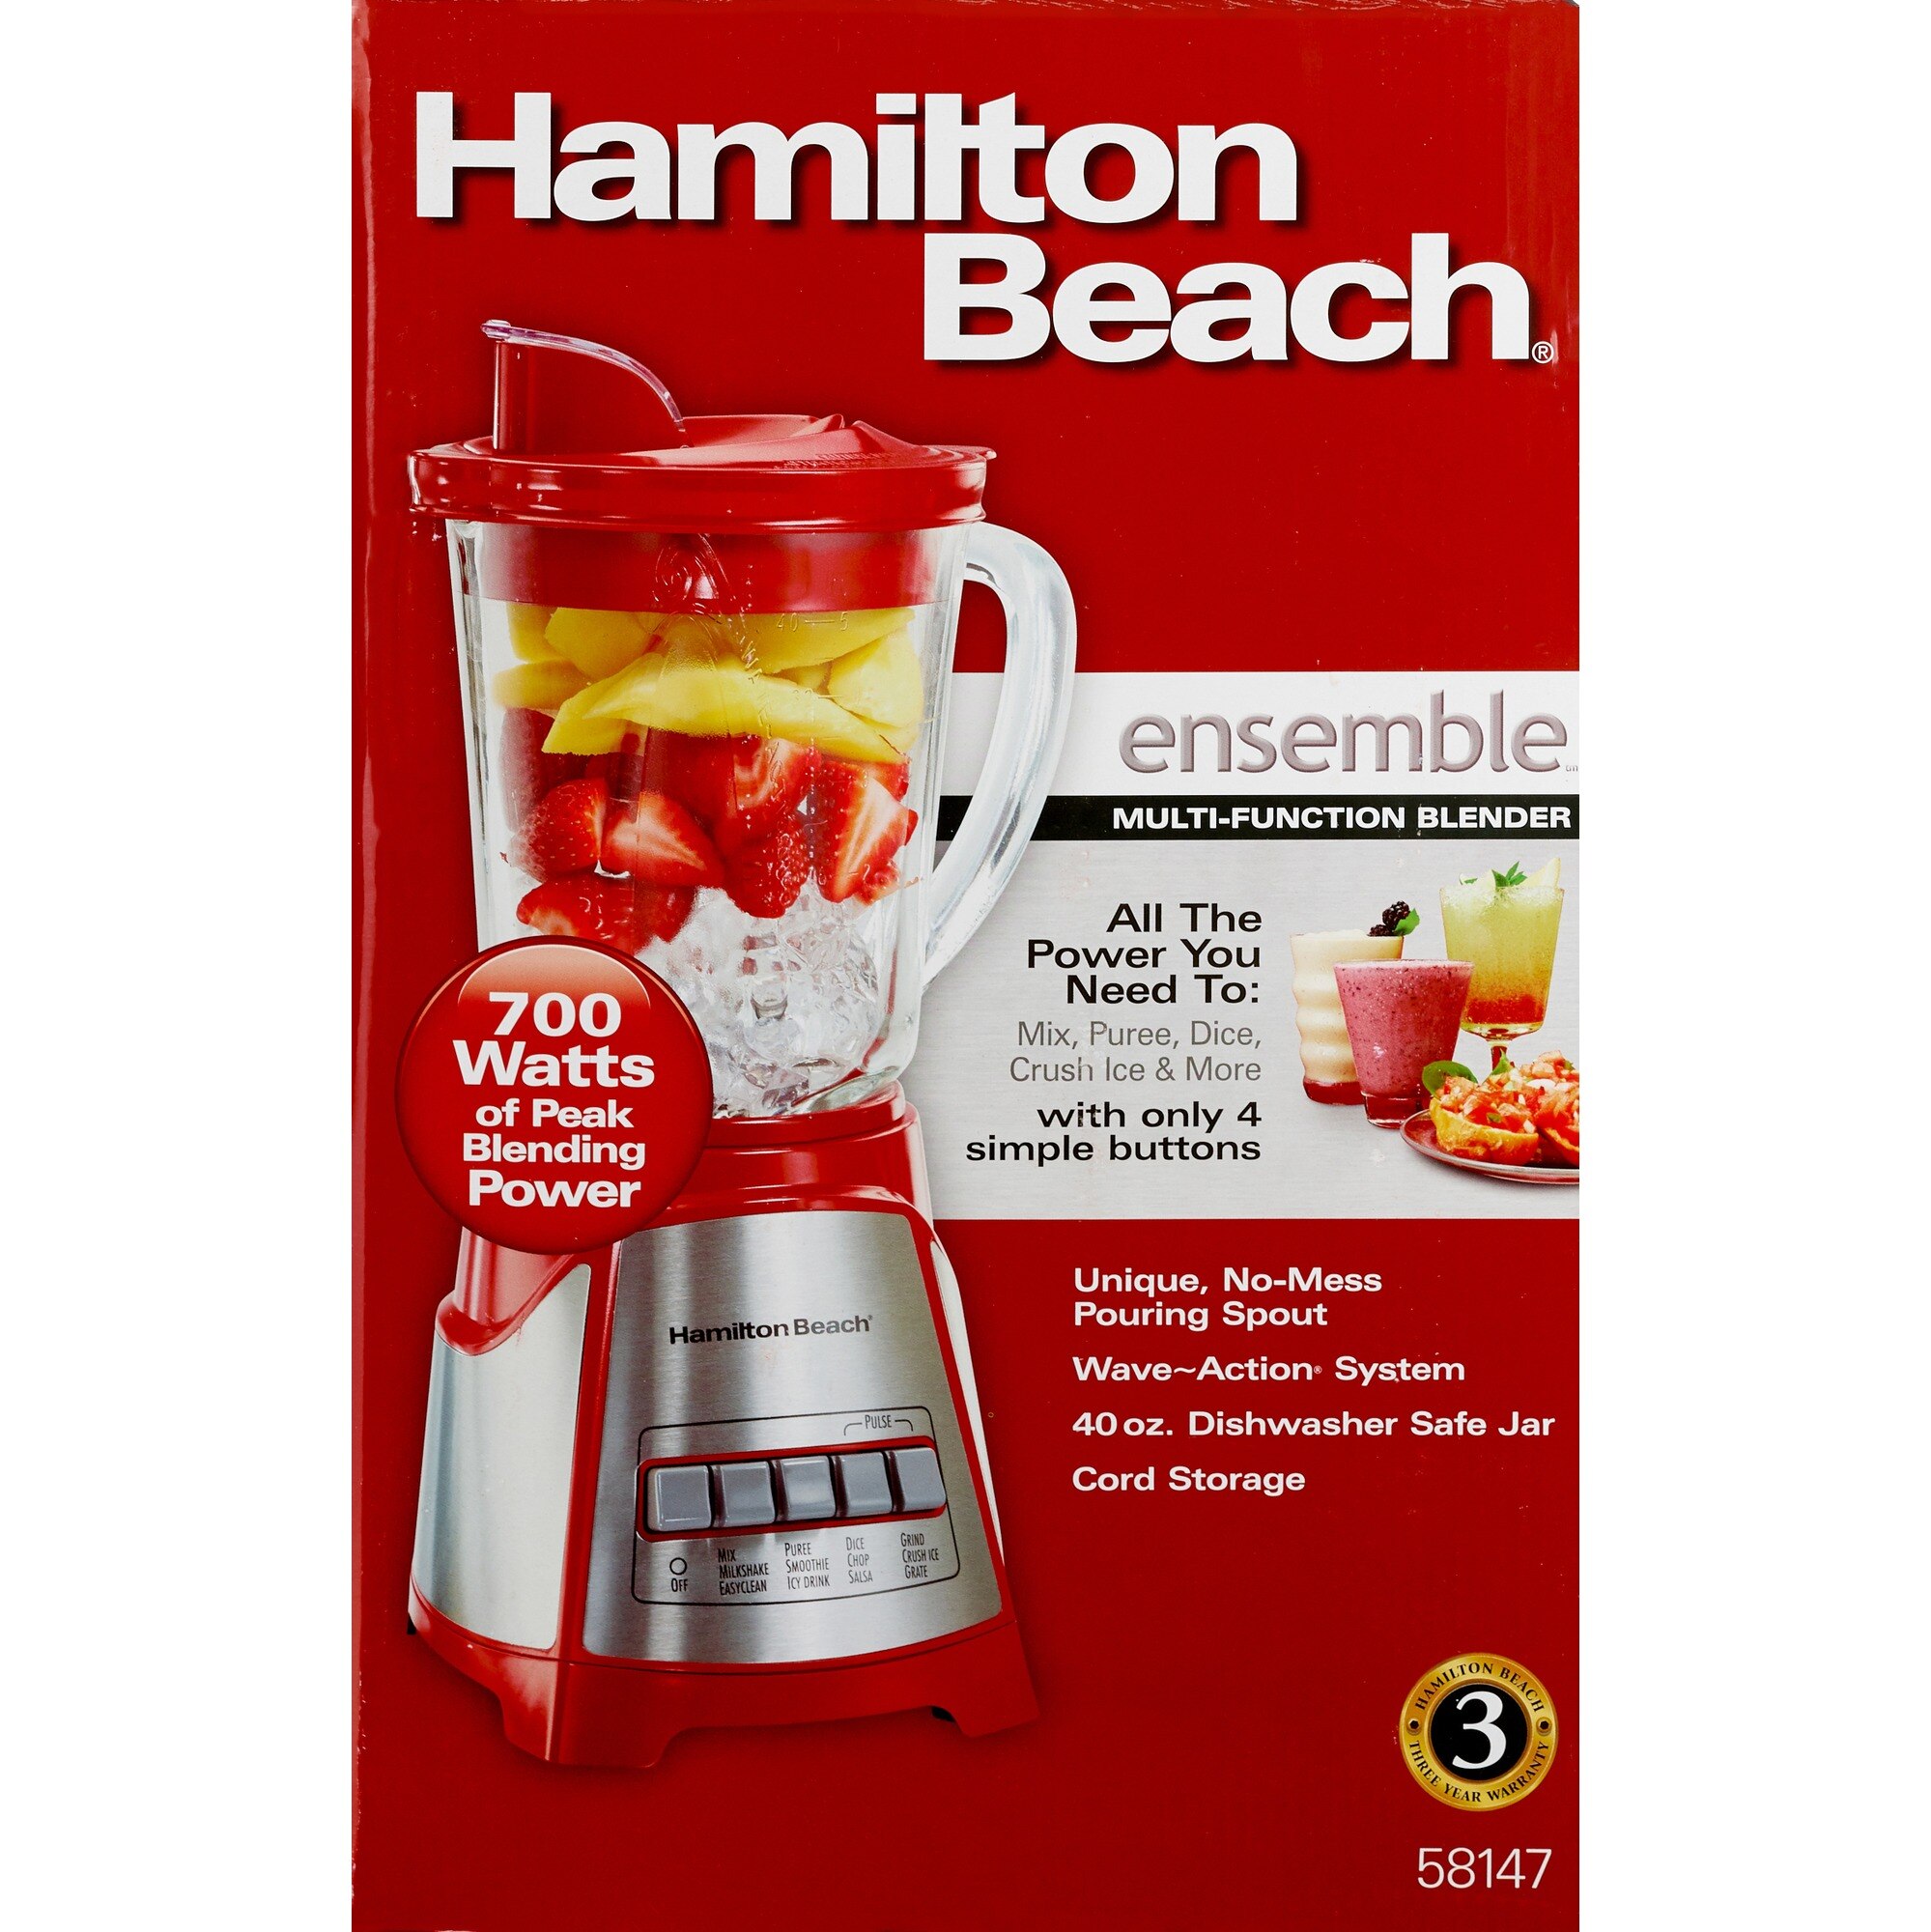 Review: Hamilton Beach Food Processor: Amazing. Versatile. 